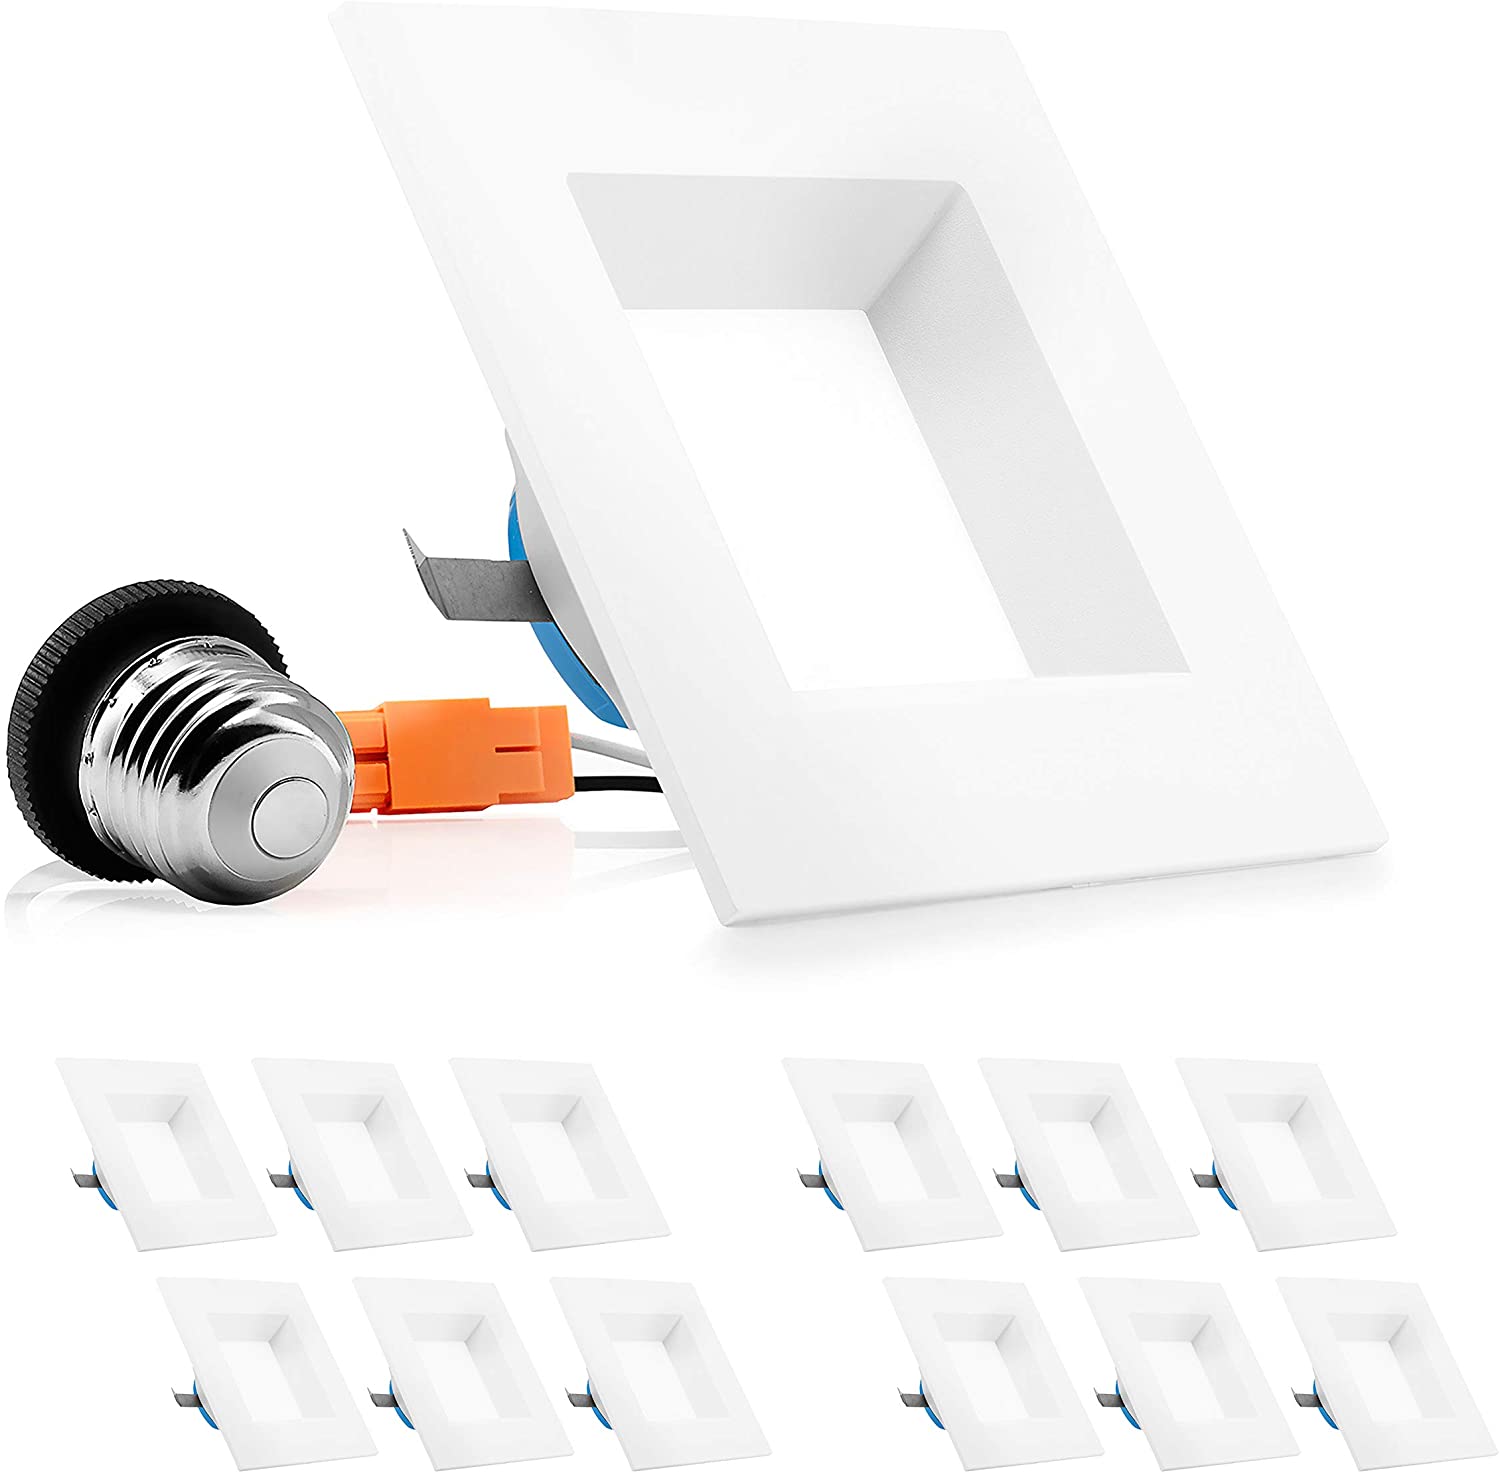 PARMIDA 4 inch Dimmable LED Square Recessed Retrofit Lighting